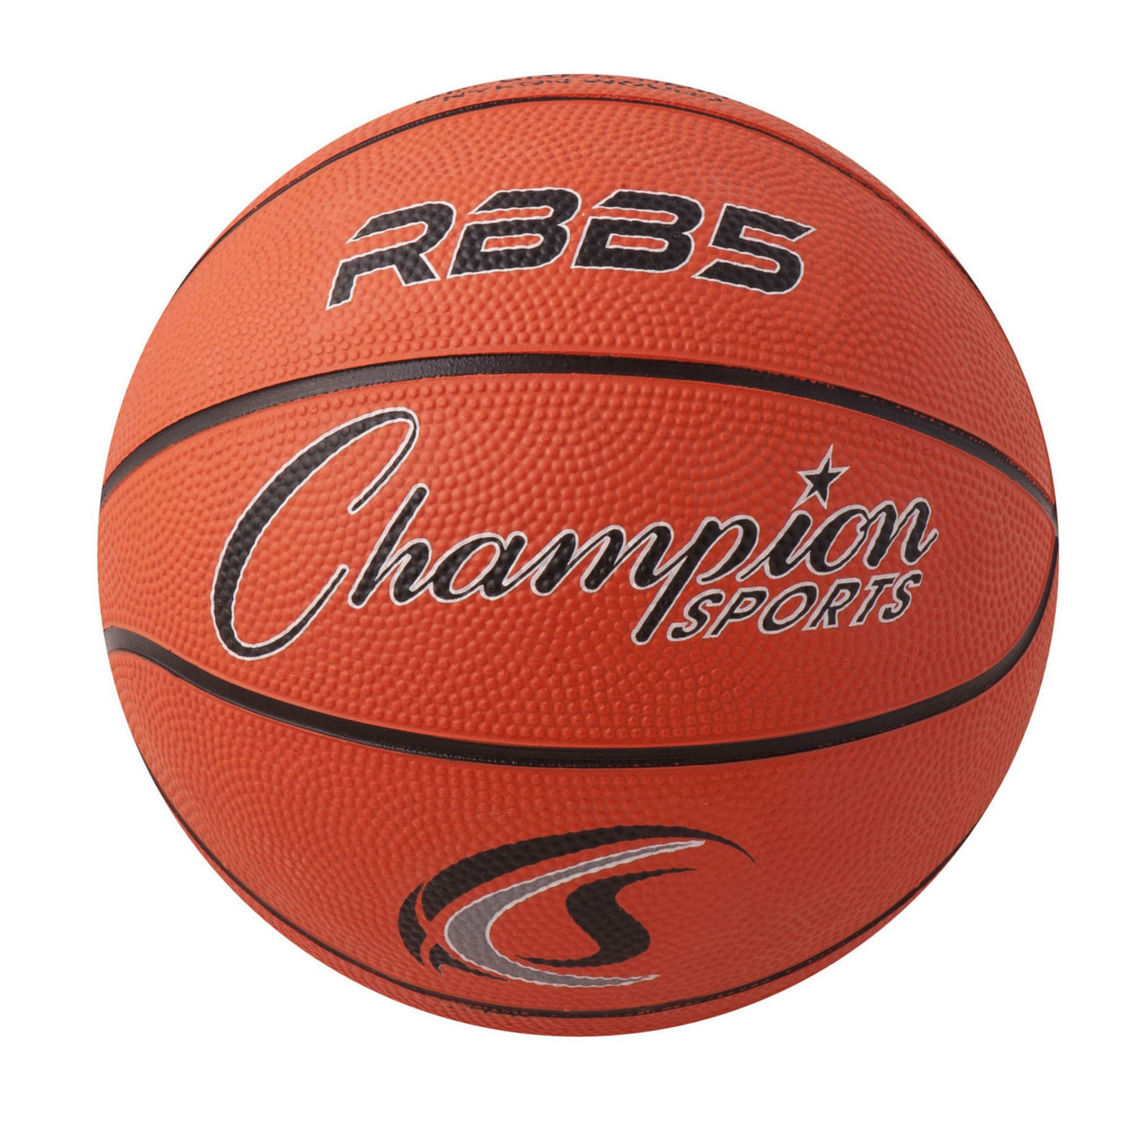 Champion Sports Mini Rubber Basketball, Orange, Pack of 3 - Image 2 of 2